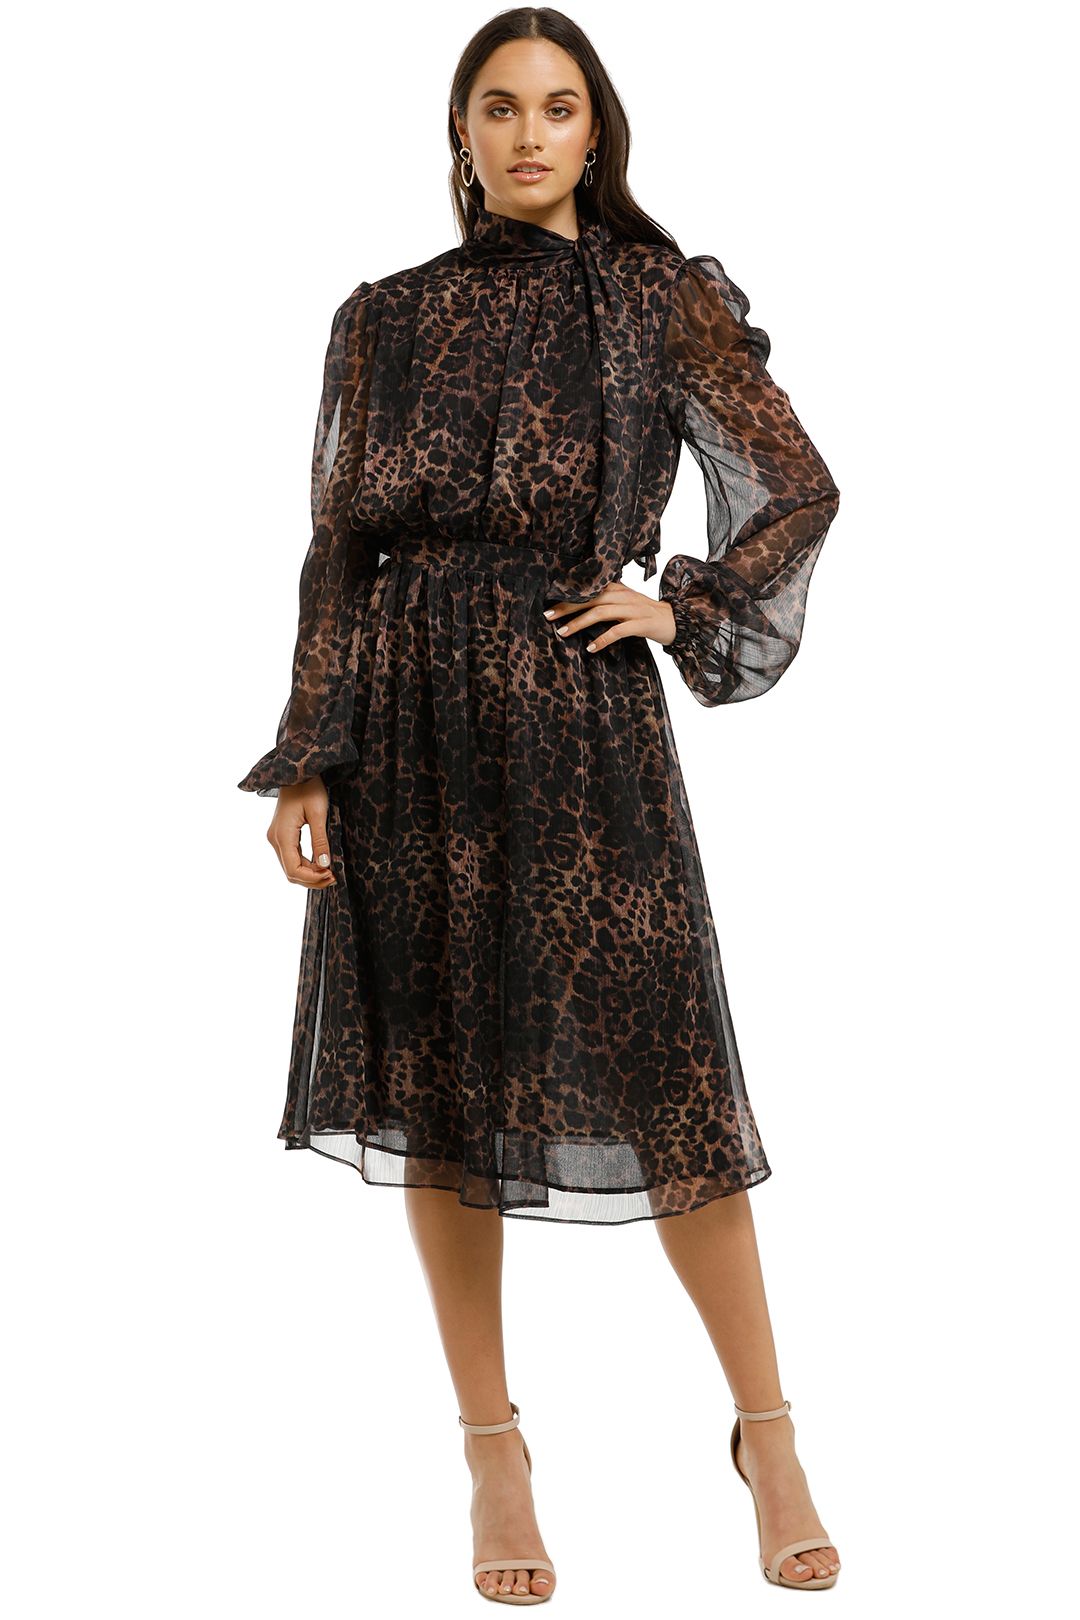 Misha-Collection-Sofia-Dress-Leopard-Front